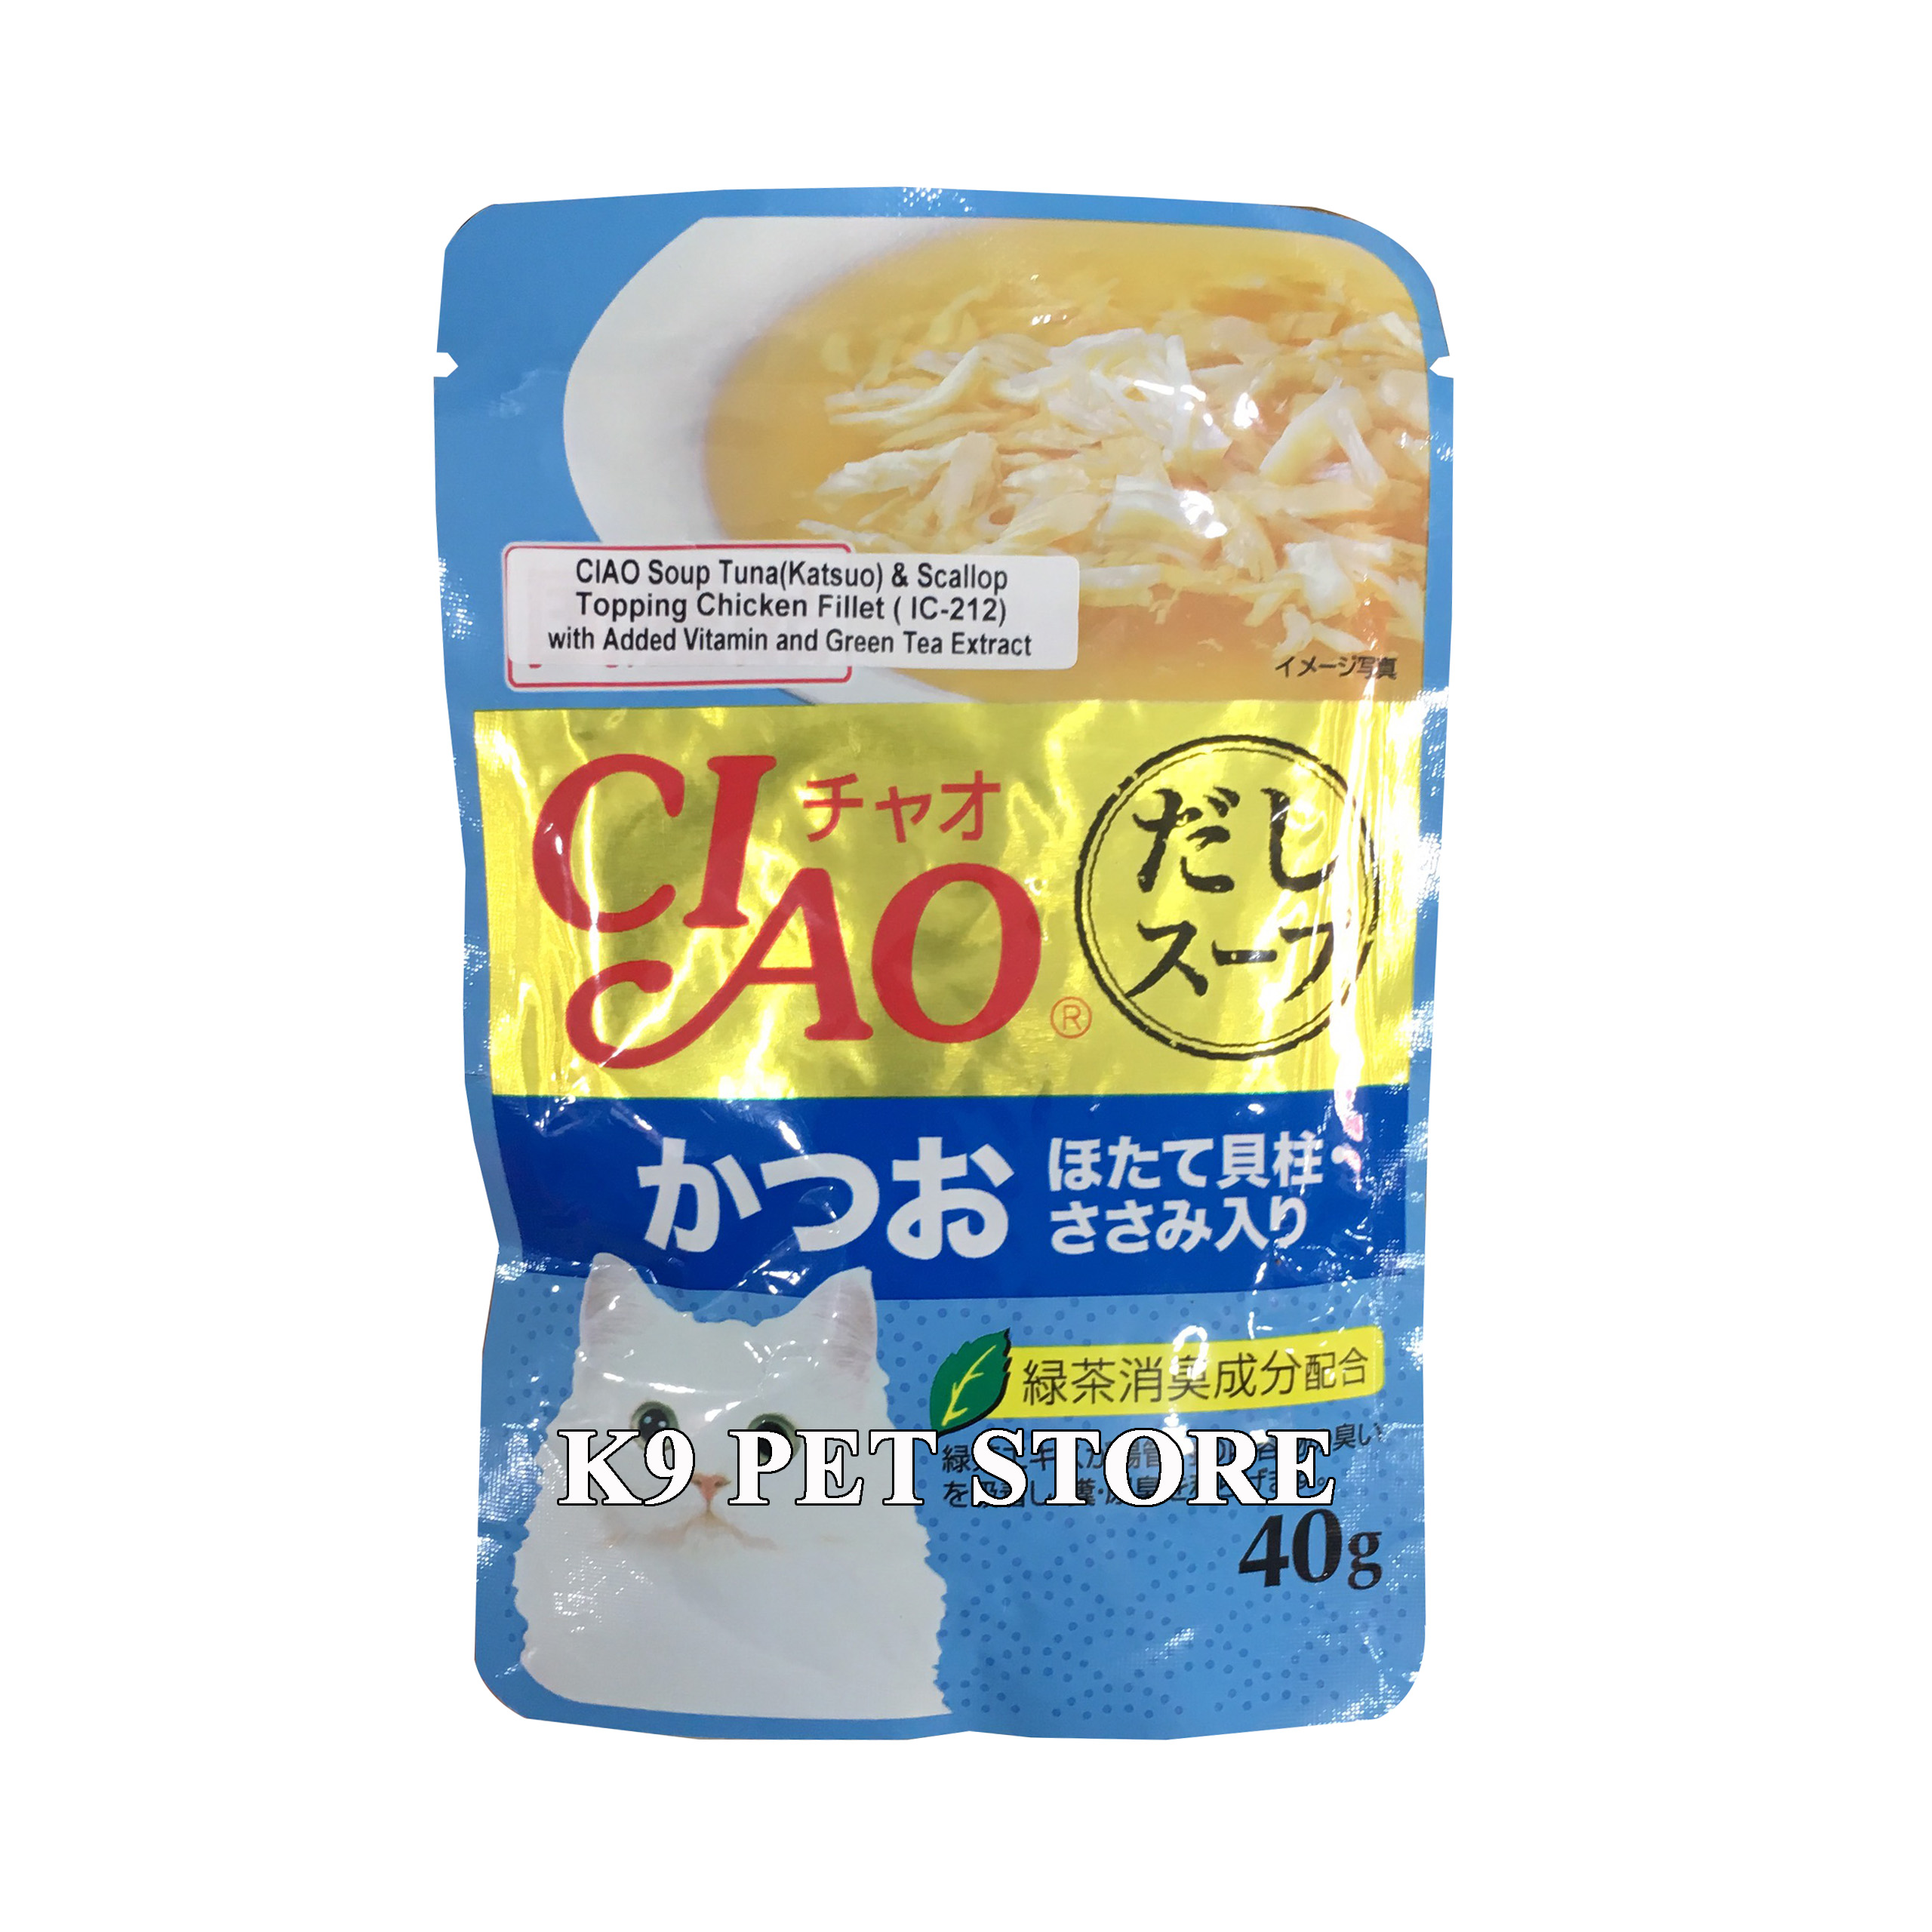 [IC-212] Pate Ciao cho mèo Soup Tuna (Katsuo) & Scallop Topping Chicken Fillet 40g